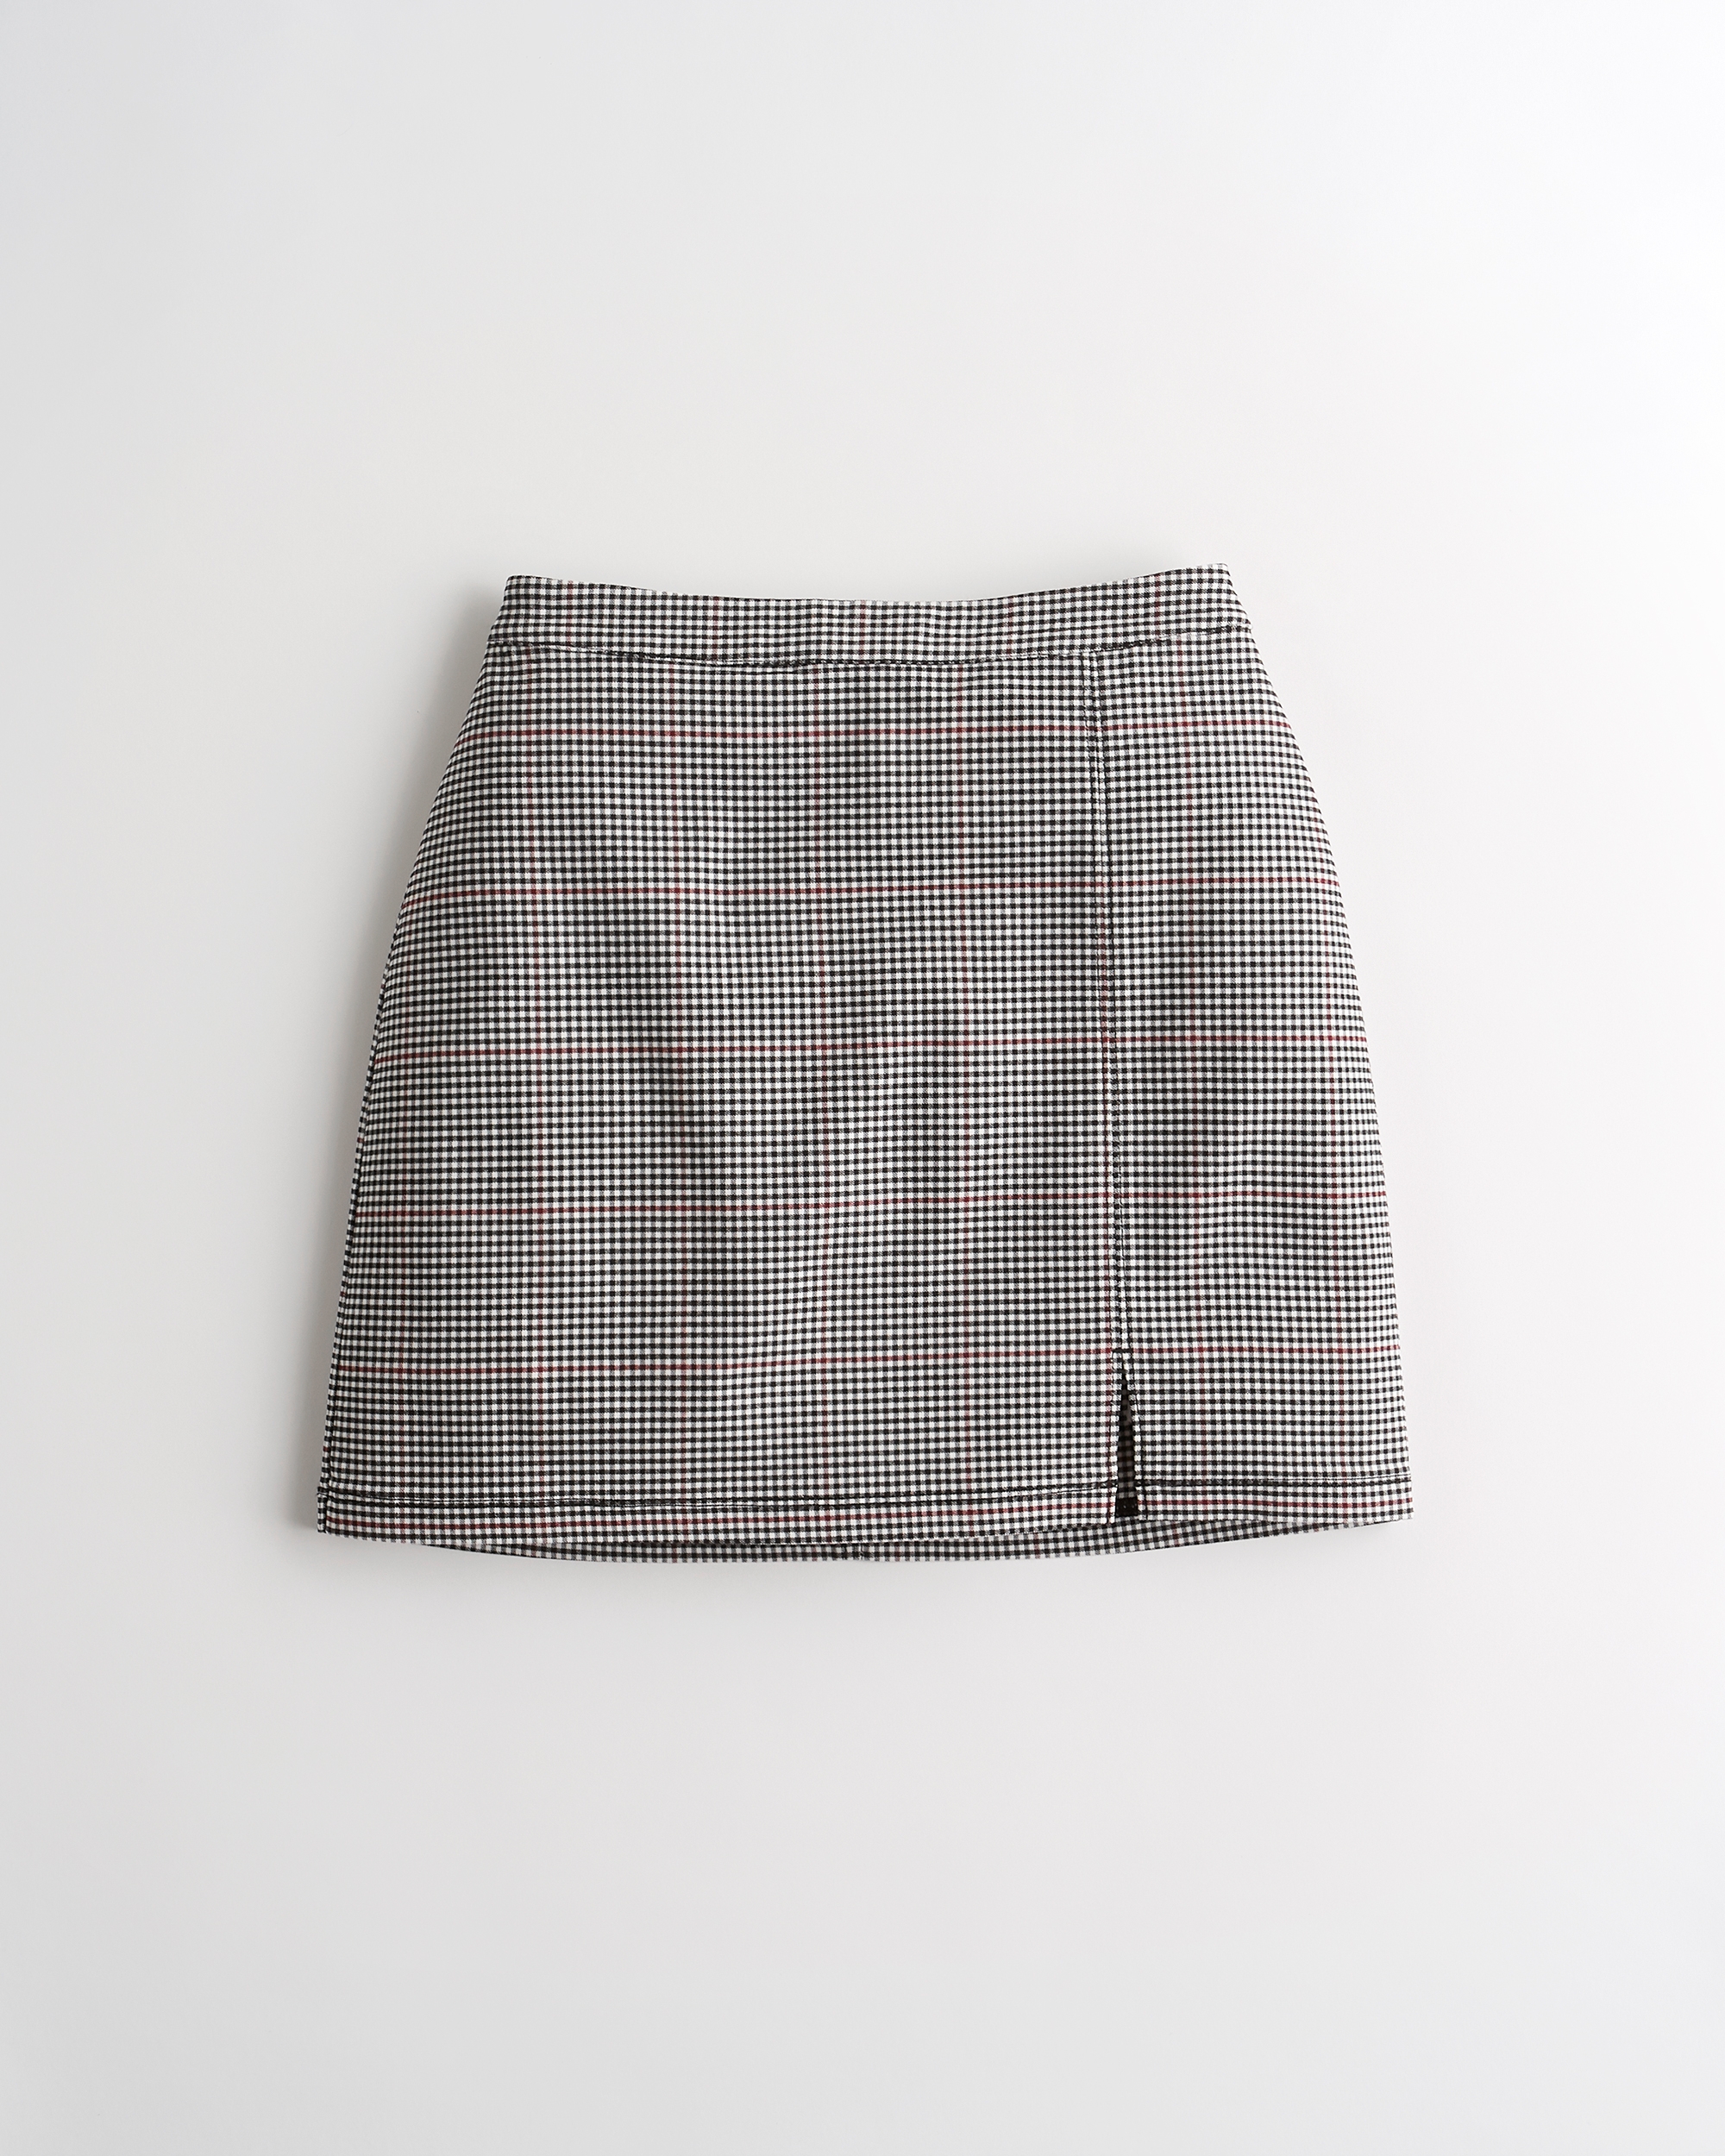 Girls Skirts: Denim, Plaid & Mini Skirts for Teens | Hollister Co.